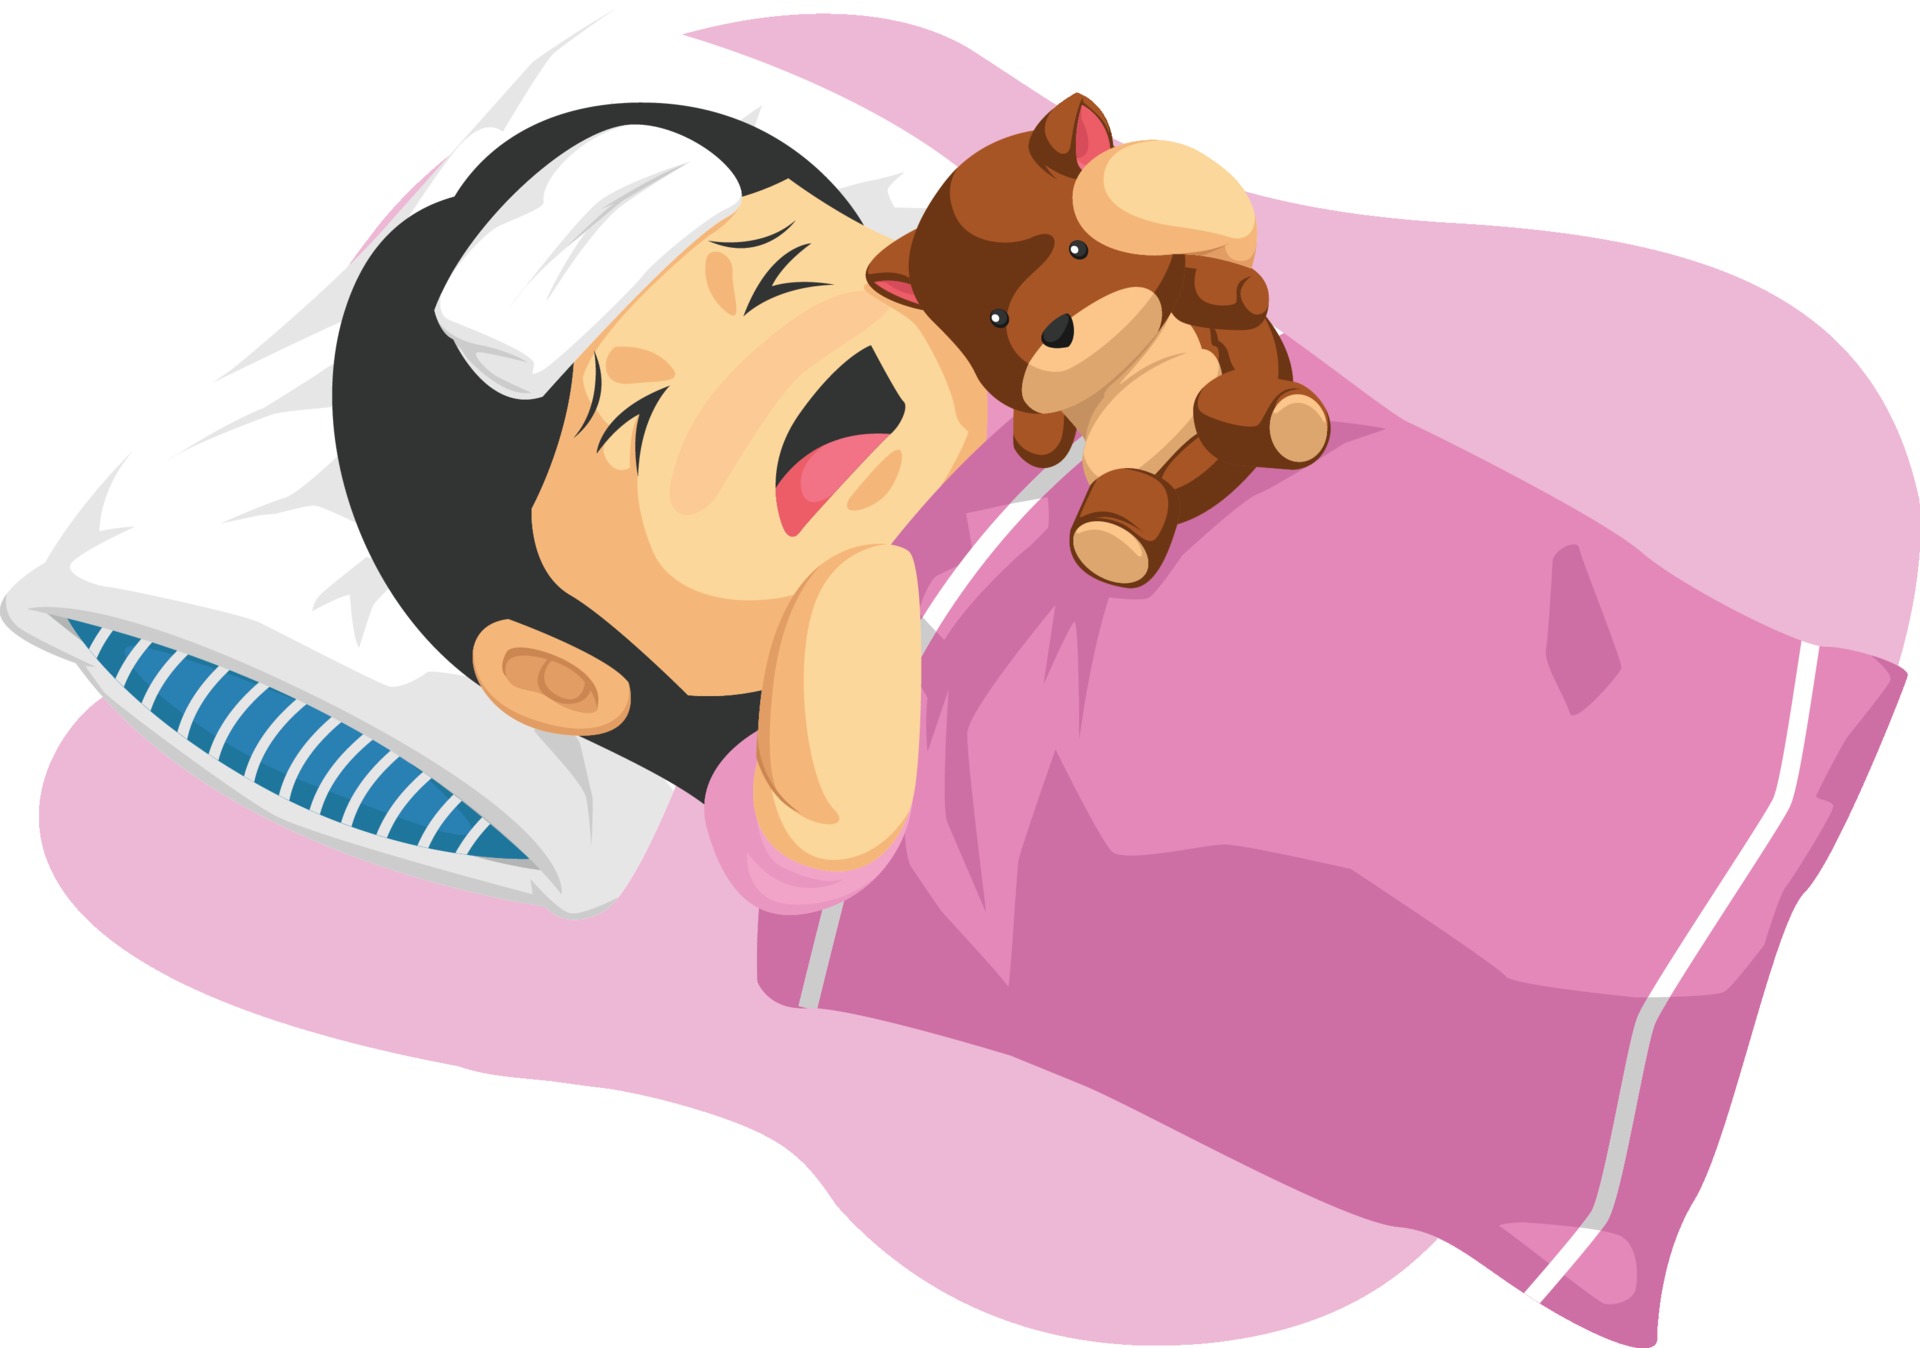 Download the Sick Cold Compressed Kid Fever Flu Illness Cartoon Illustratio...